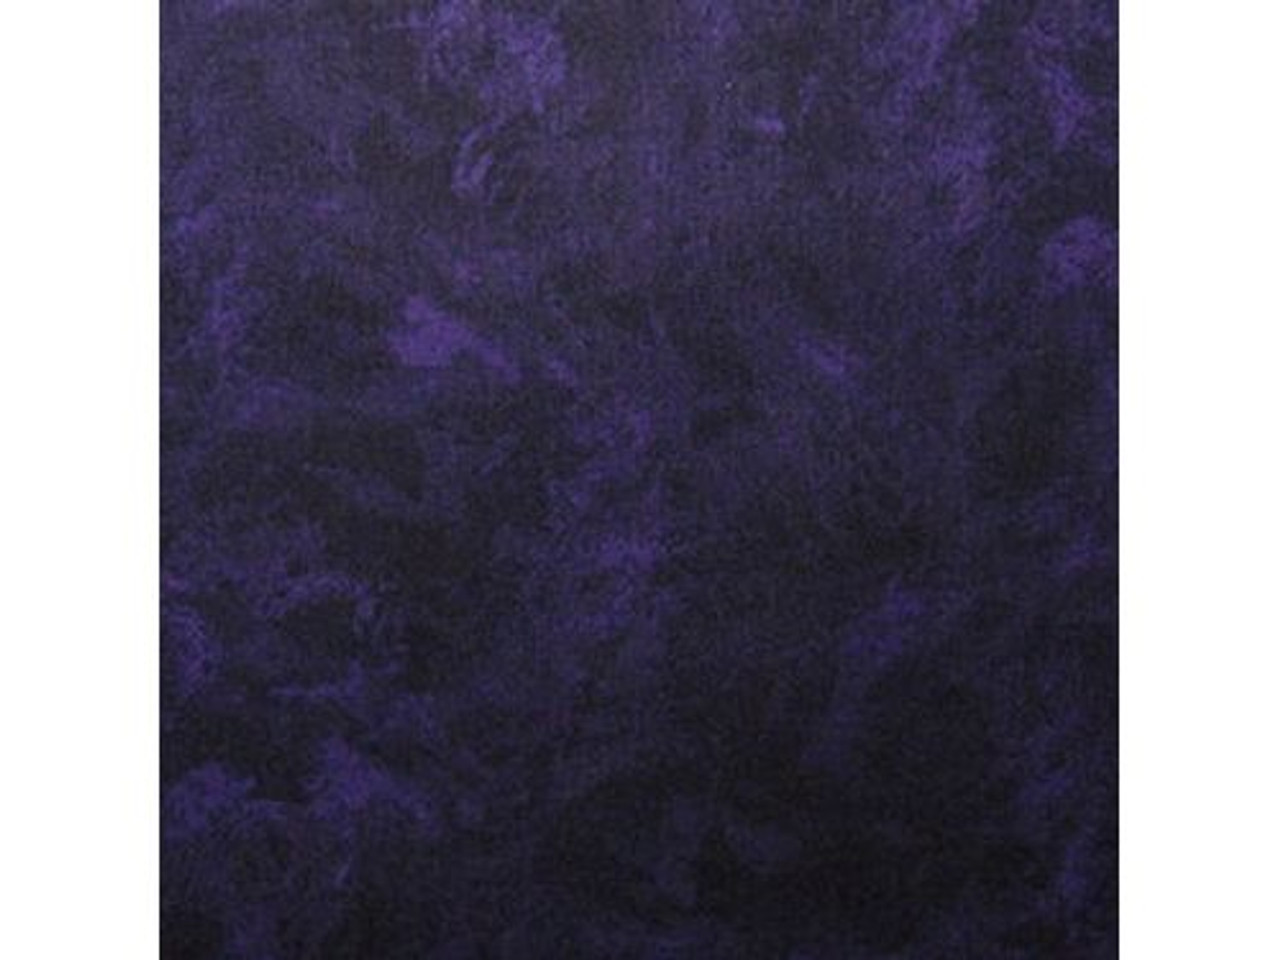 Majestic Purple Fabric, Blenders